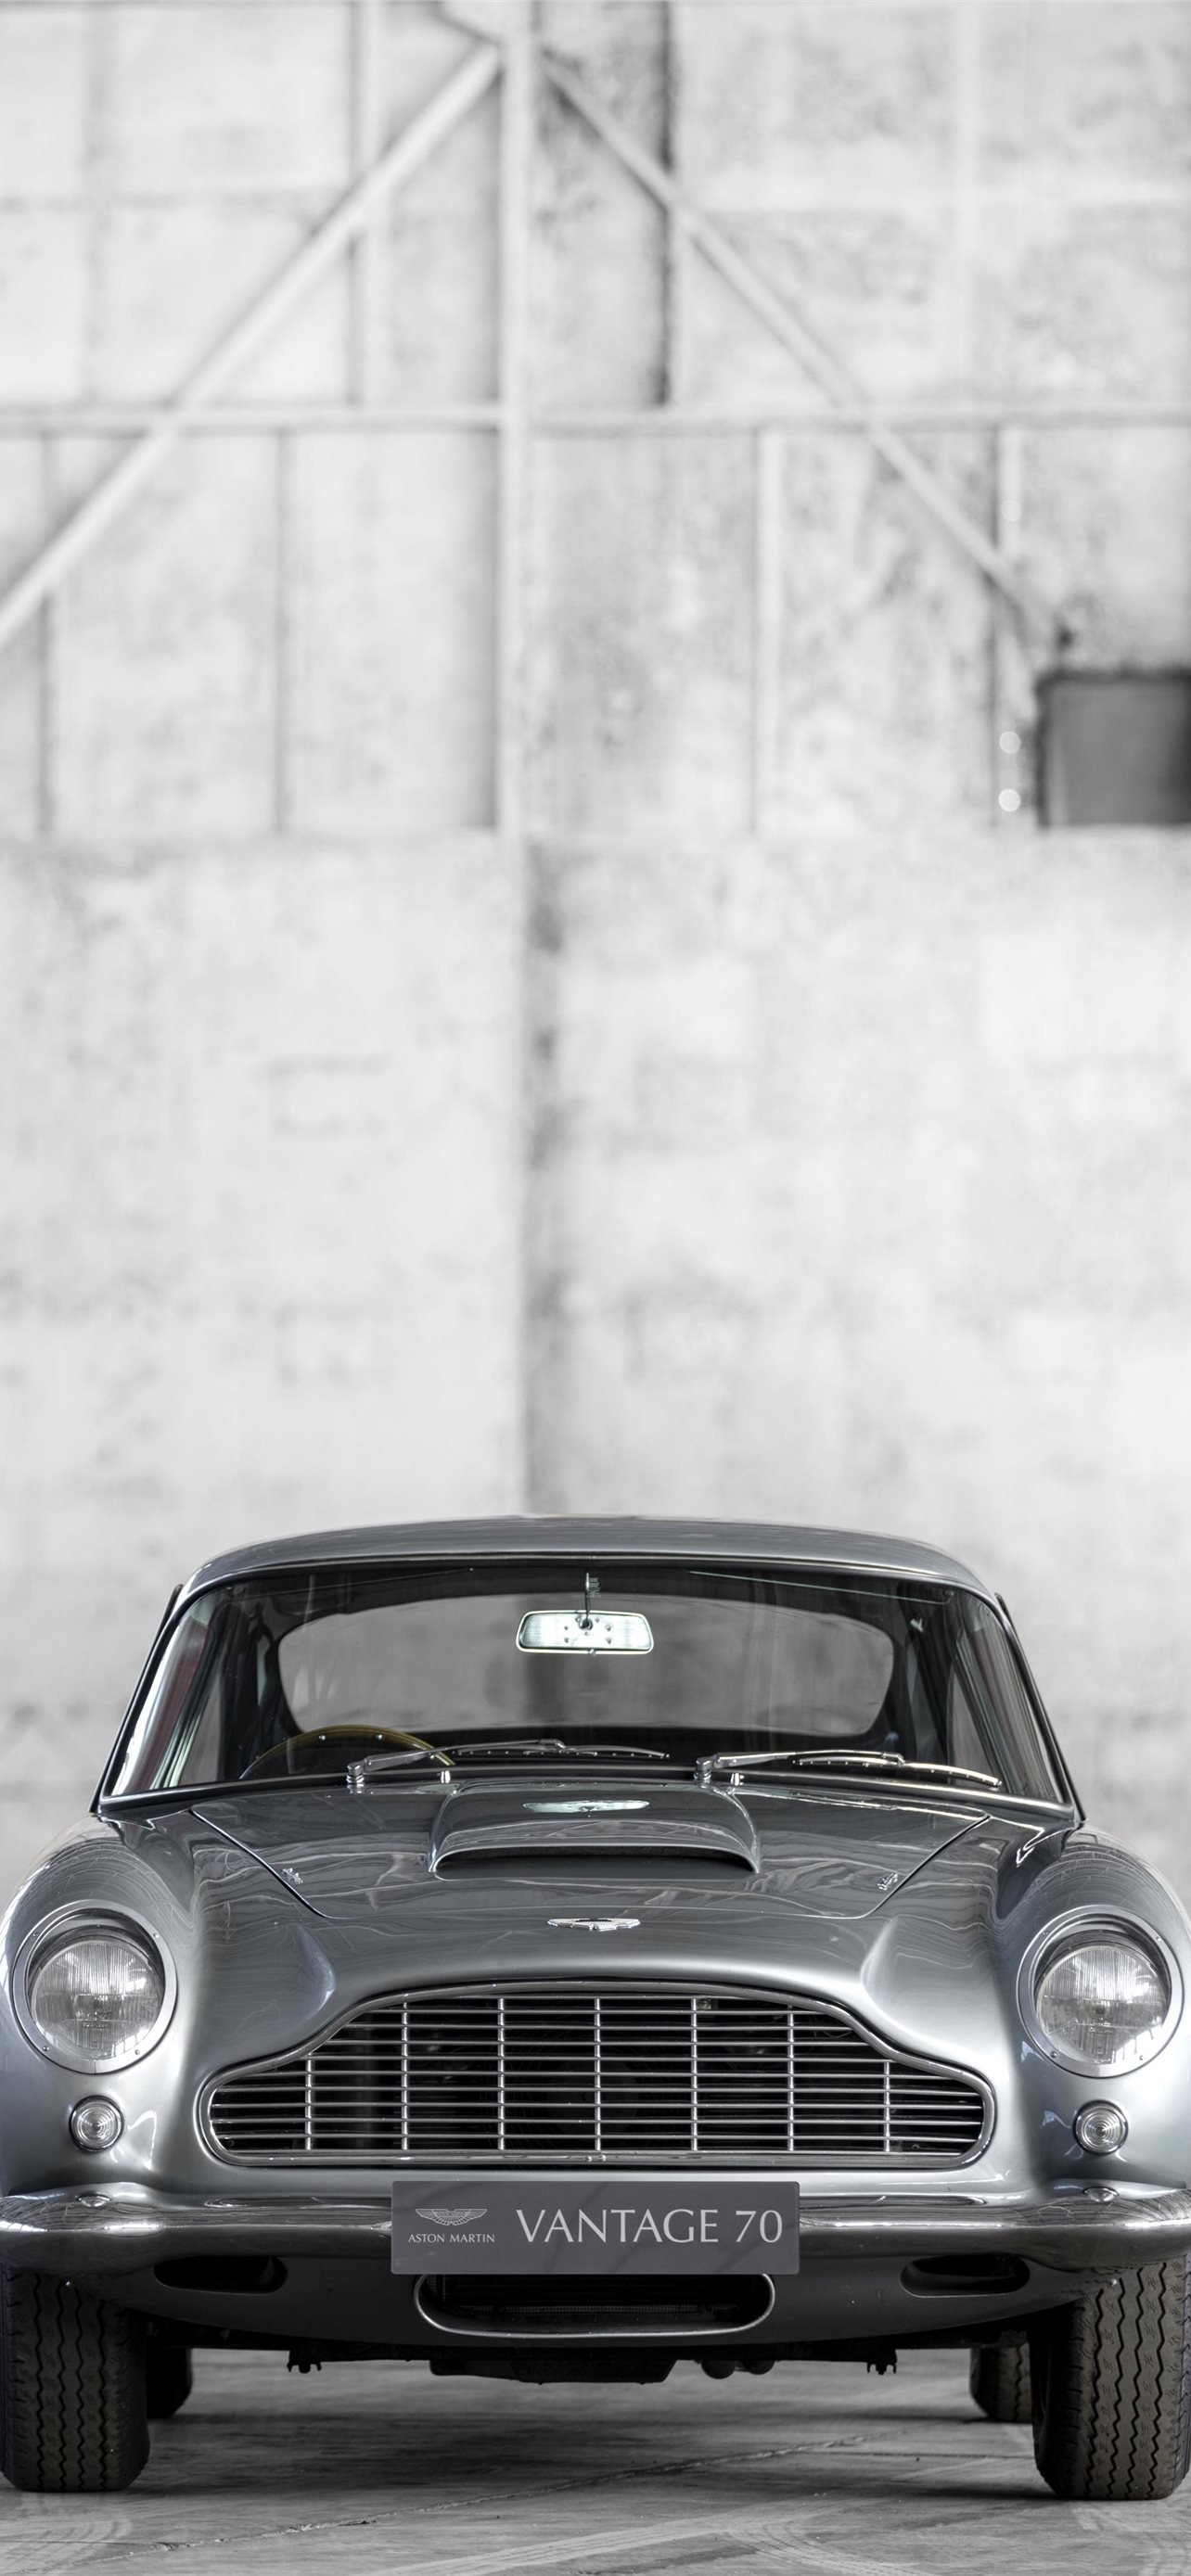 Aston Martin iPhone Wallpapers - Wallpaper Cave